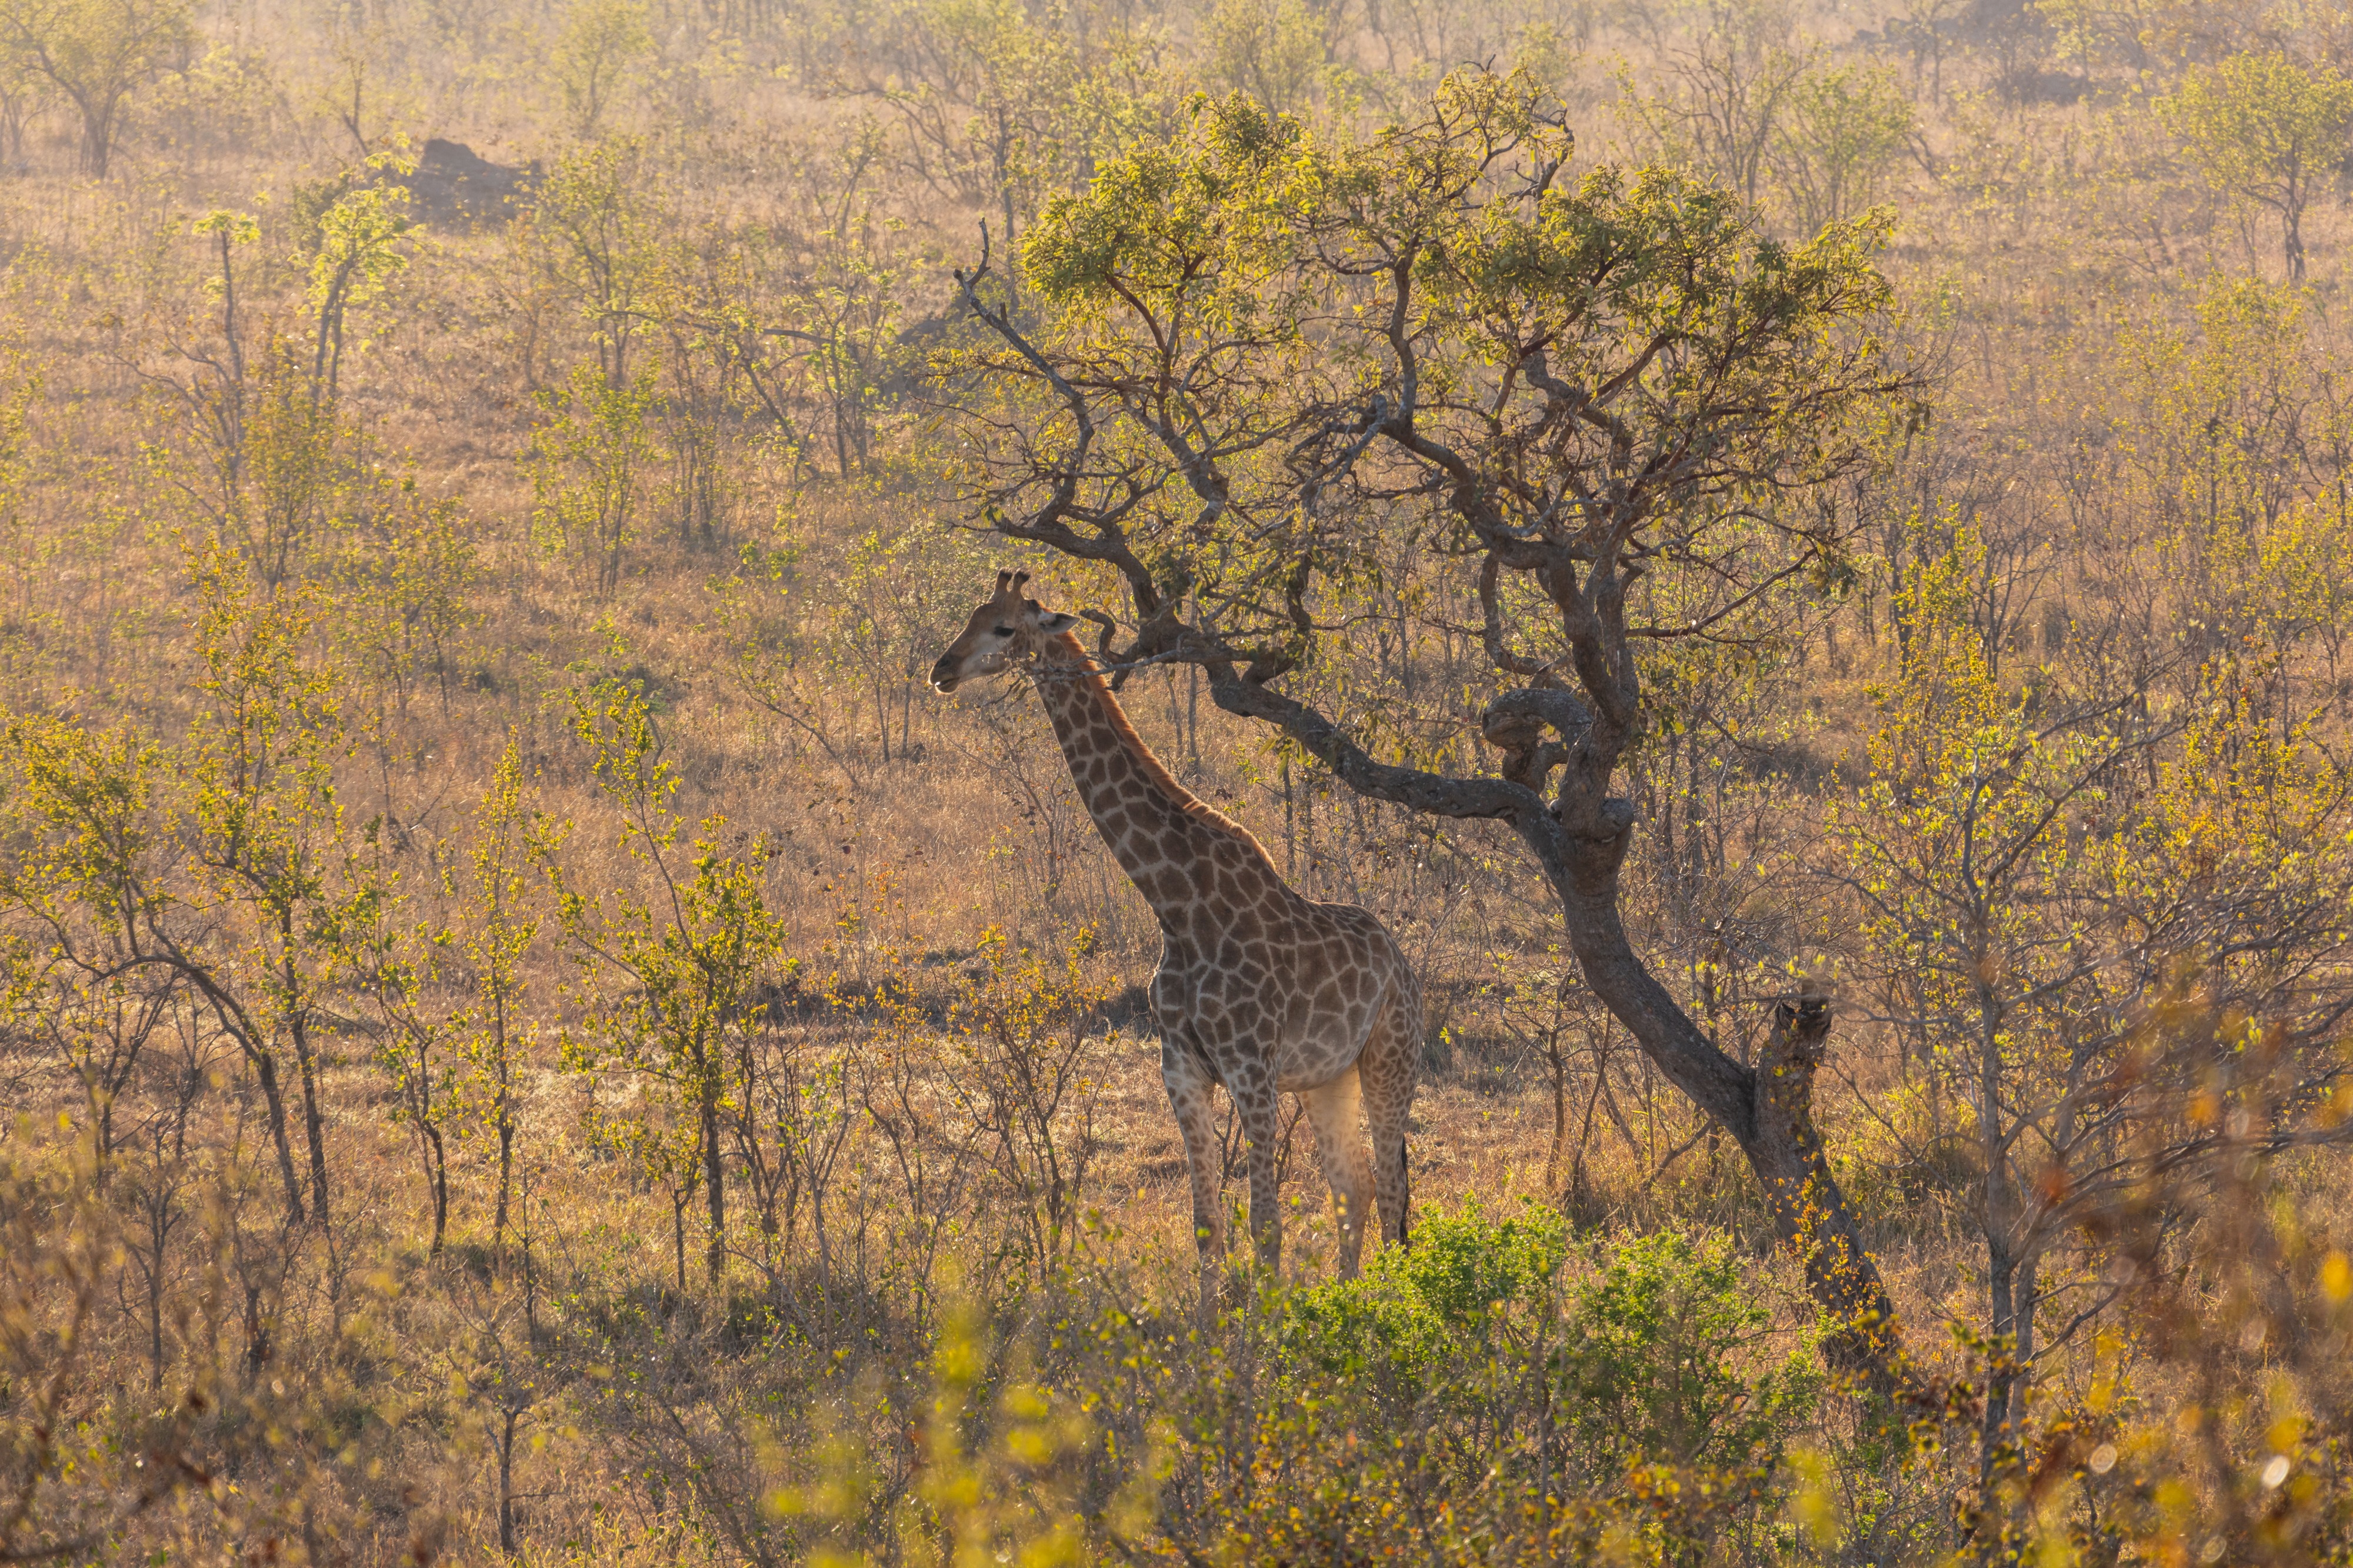 Jirafa (Giraffa camelopardalis), parque nacional Kruger, Sudáfrica, 2018-07-25, DD 18